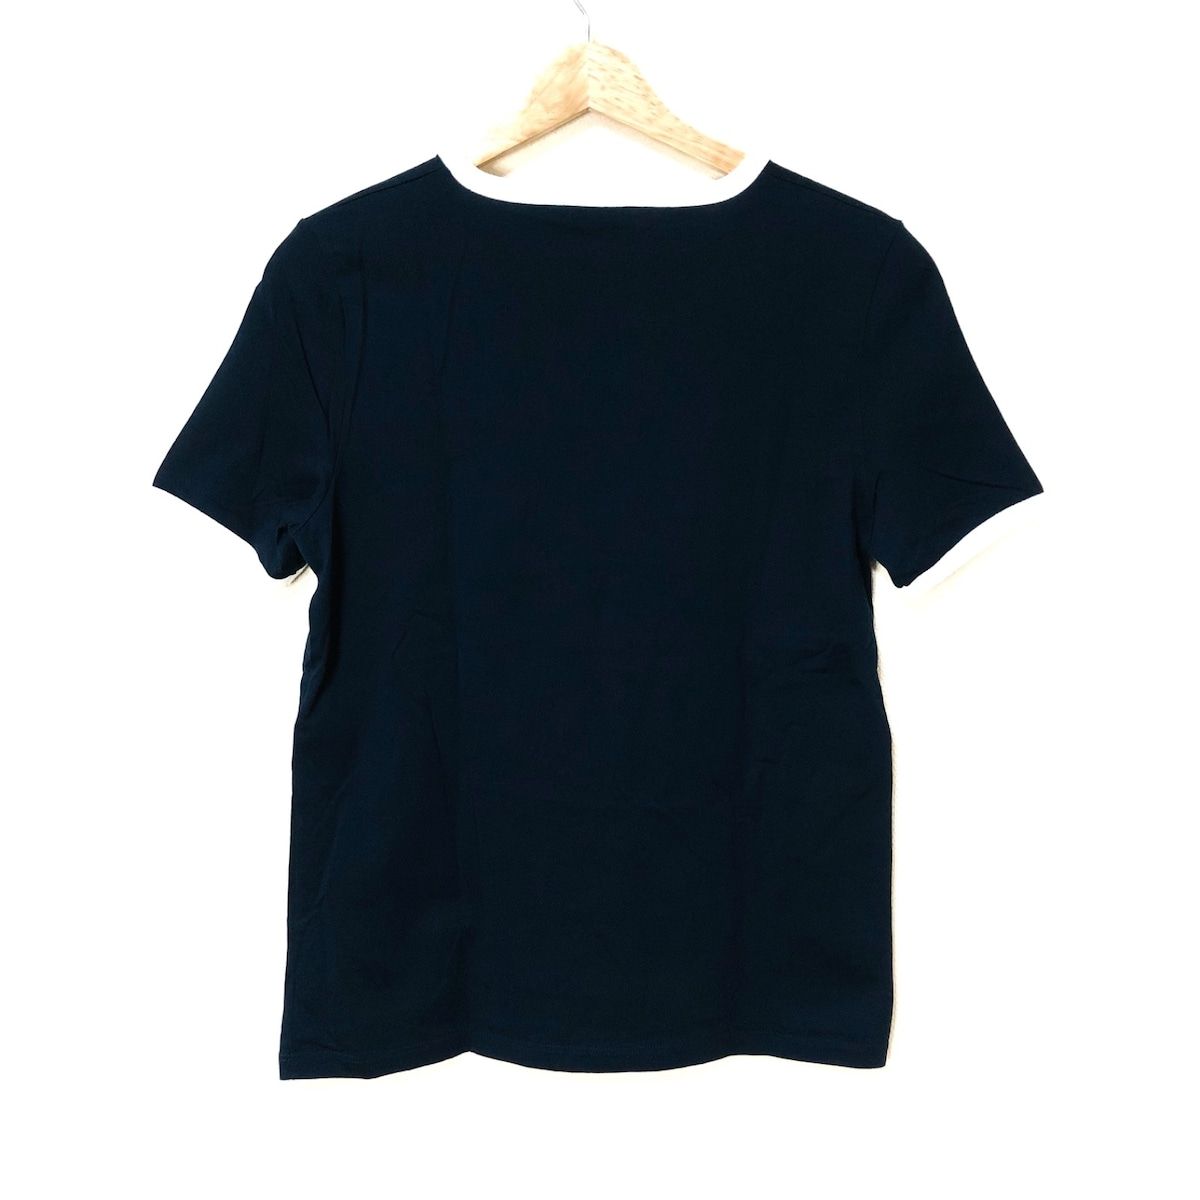 CELINE(セリーヌ) 半袖Tシャツ サイズM レディース - ネイビー×白